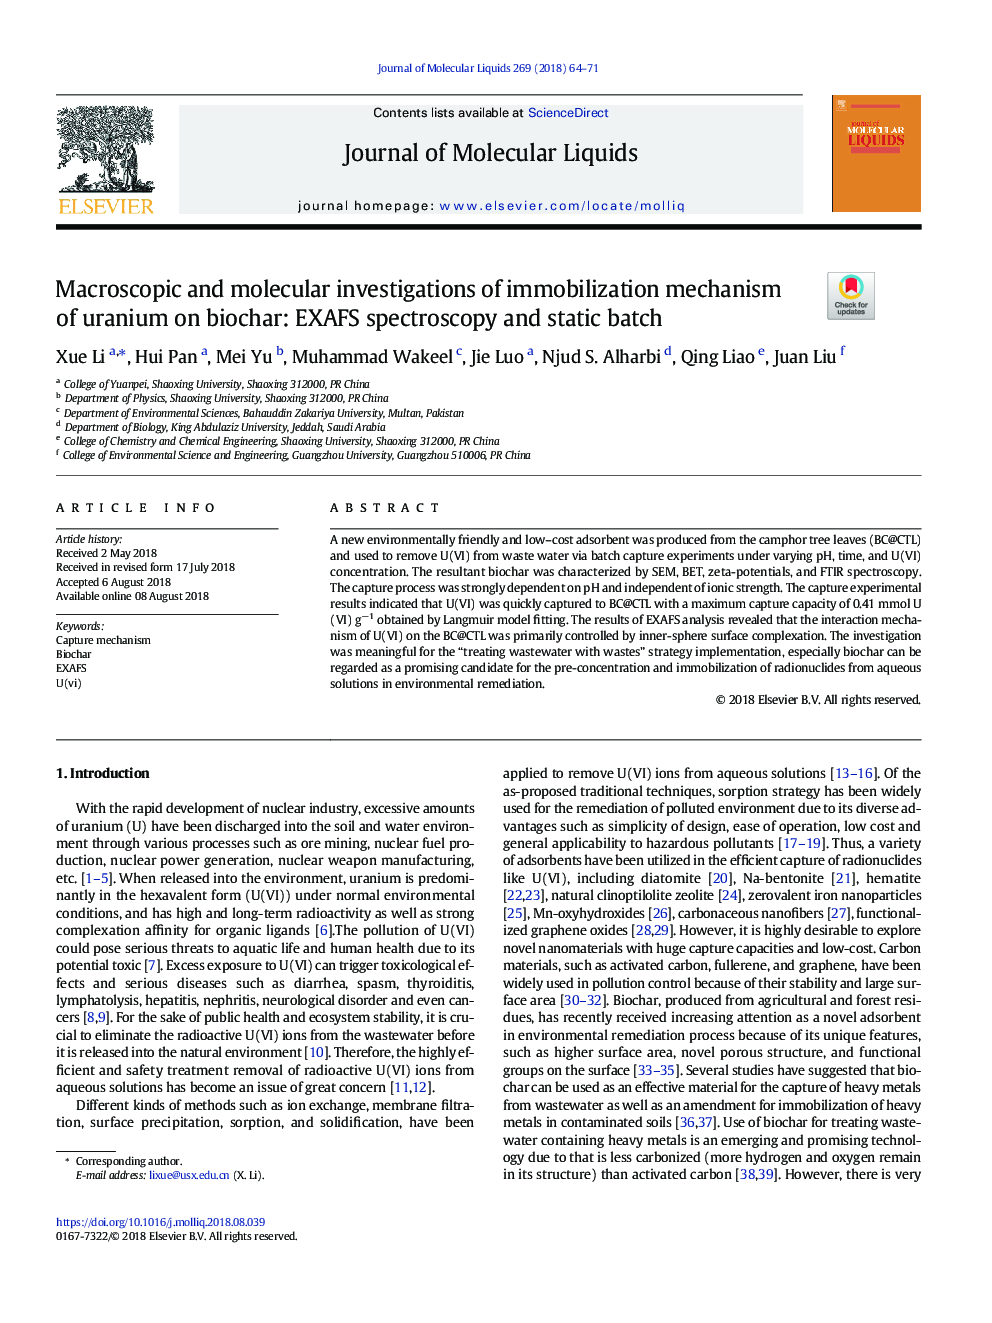 Macroscopic and molecular investigations of immobilization mechanism of uranium on biochar: EXAFS spectroscopy and static batch